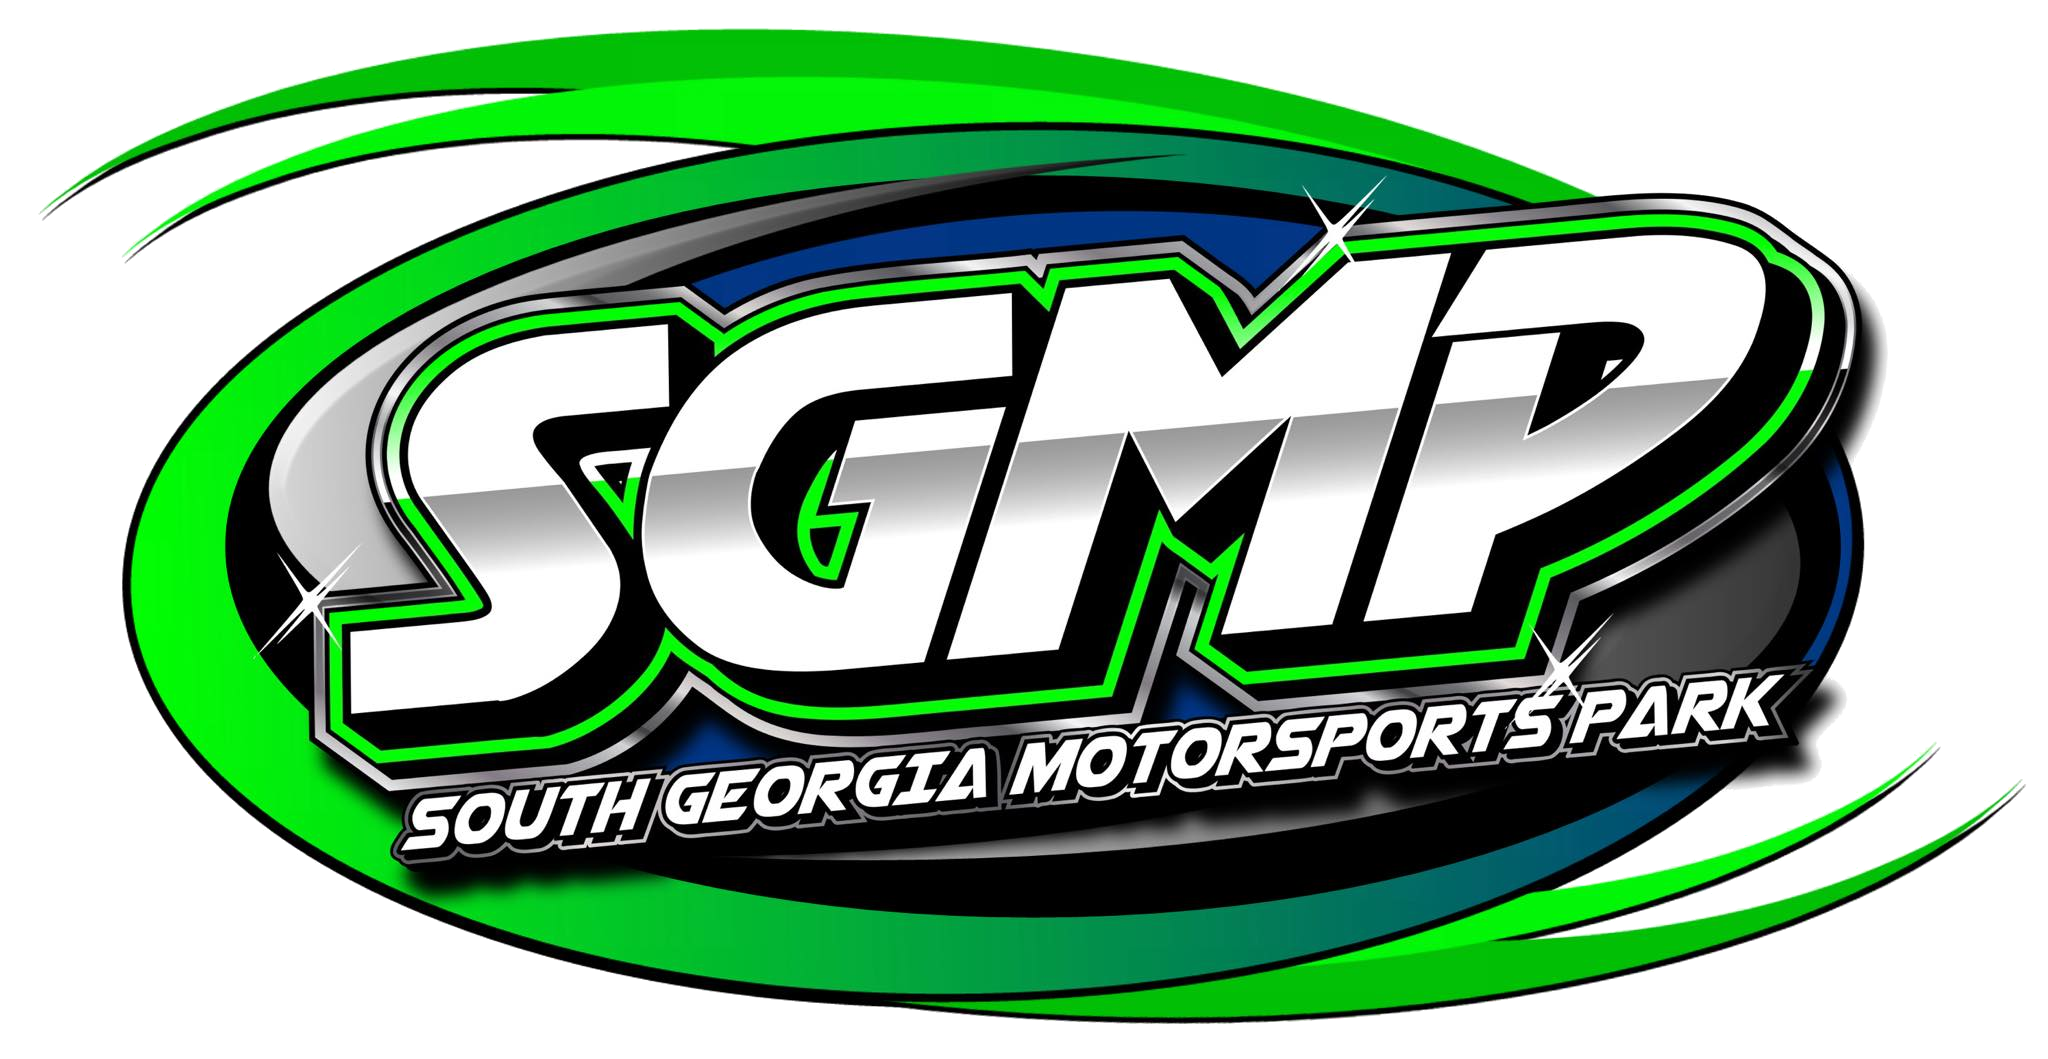 South Georgia Motorsports Park's logo